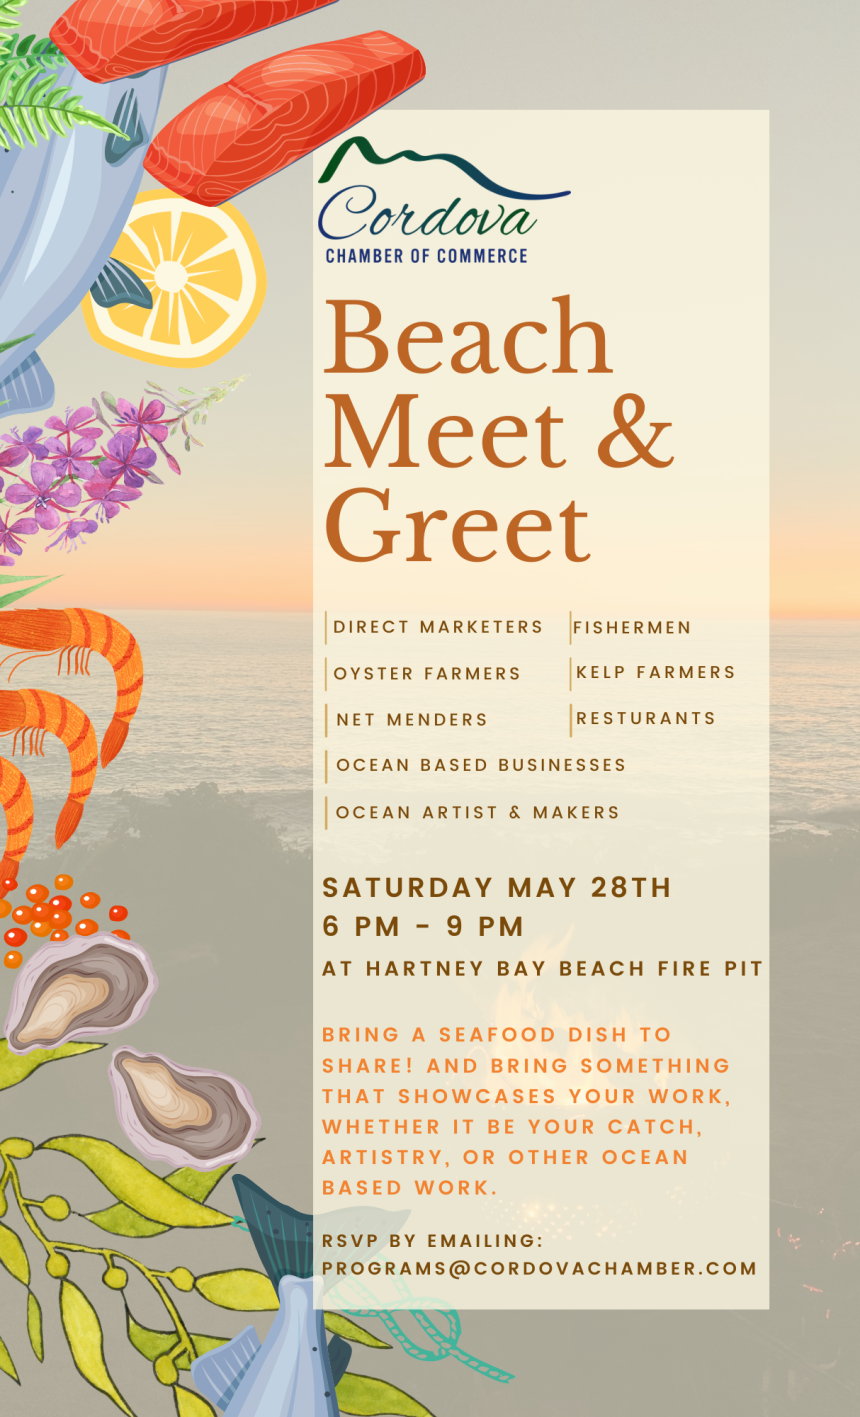 Ocean Bases Businesses: Beach Meet and Greet